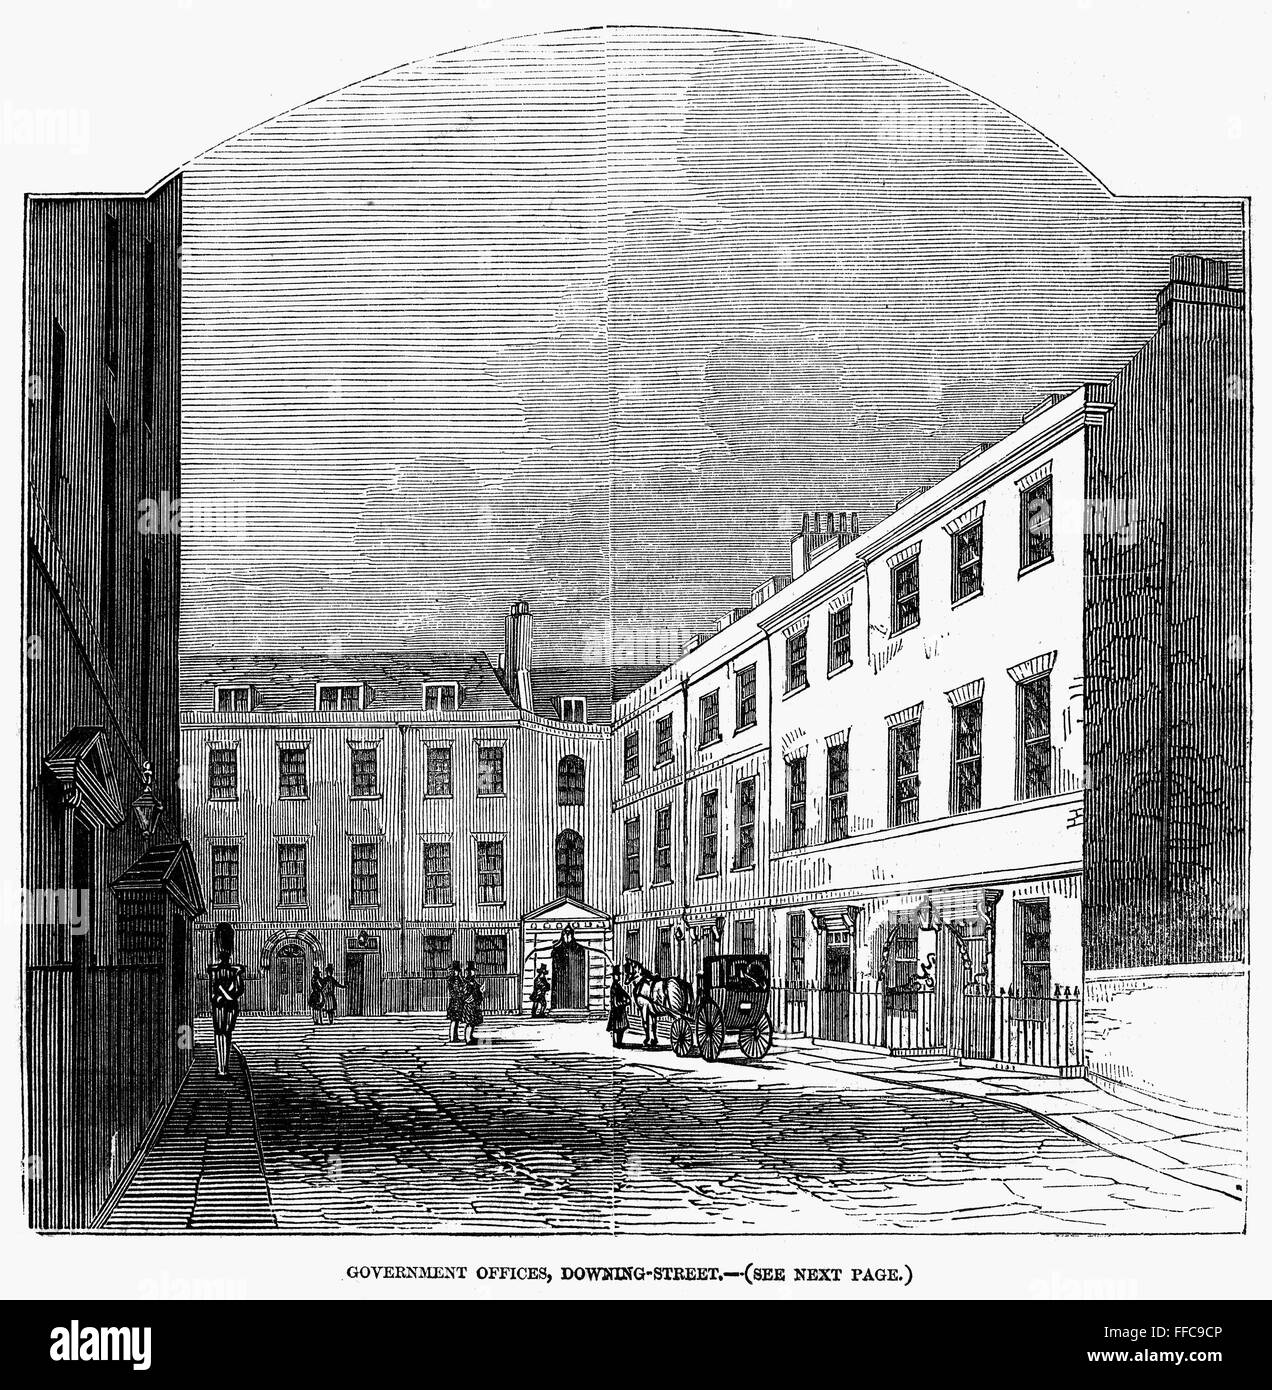 LONDON: DOWNING STREET. /nView of British government office buildings on Downing Street, London, England. Wood engraving, English, 1846. Stock Photo